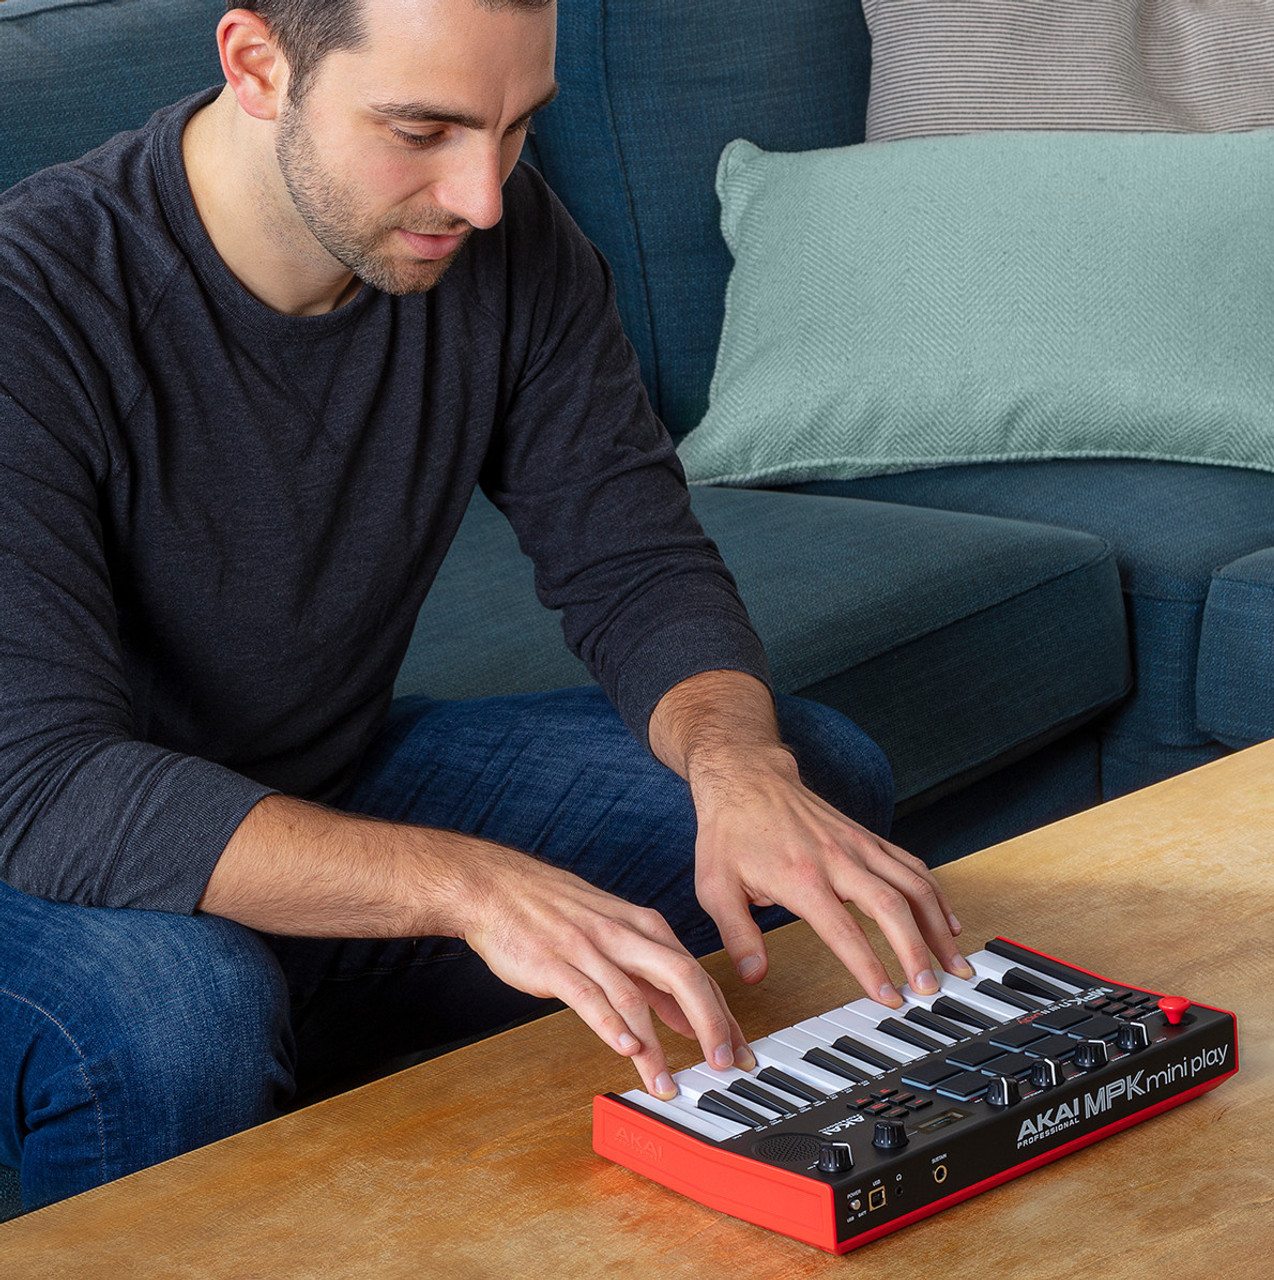 Akai MPK Mini Play - Mini Keyboard with Built-in Speakers and USB